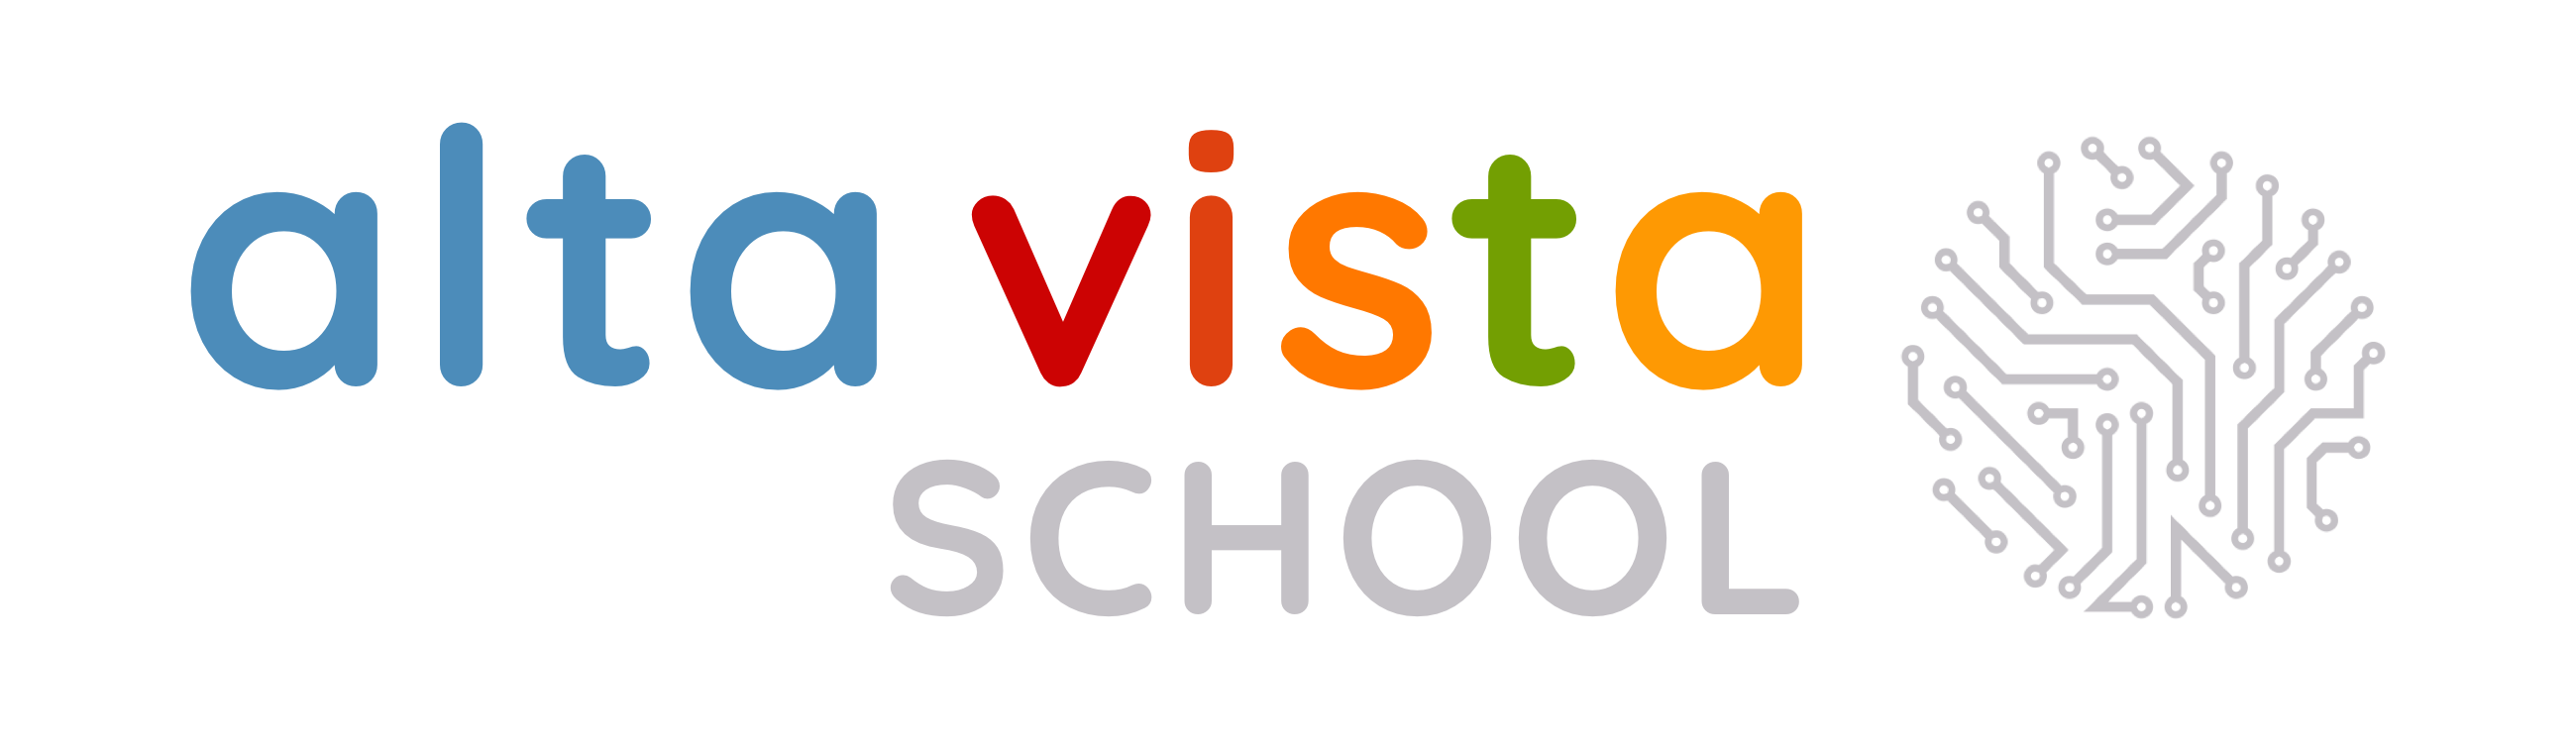 Alta Vista School logo